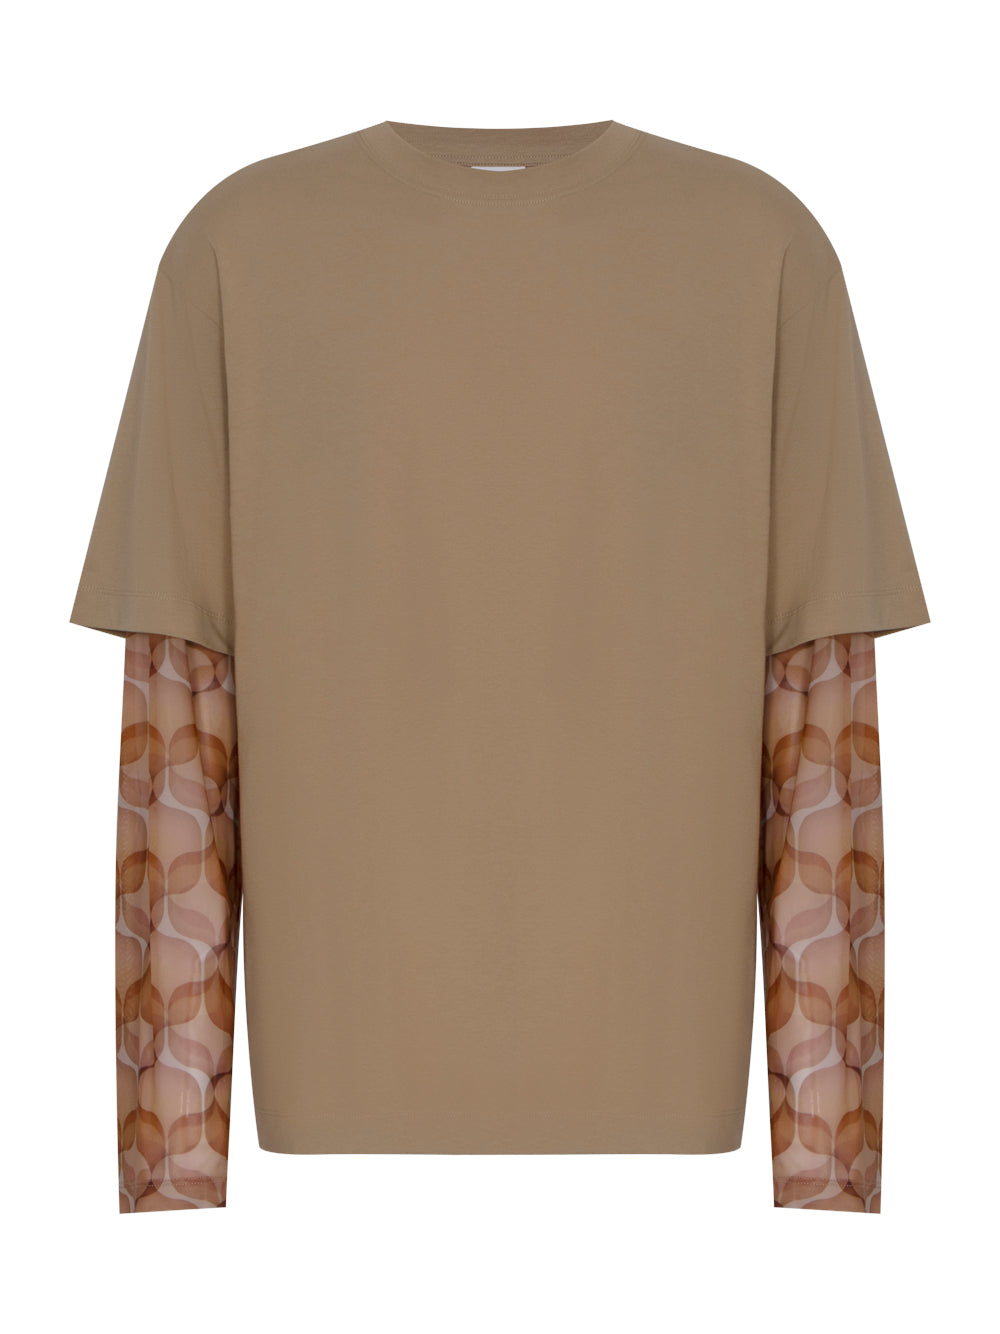 Hemal T-Shirt With Insert Mesh Print Long Sleeves (Camel)